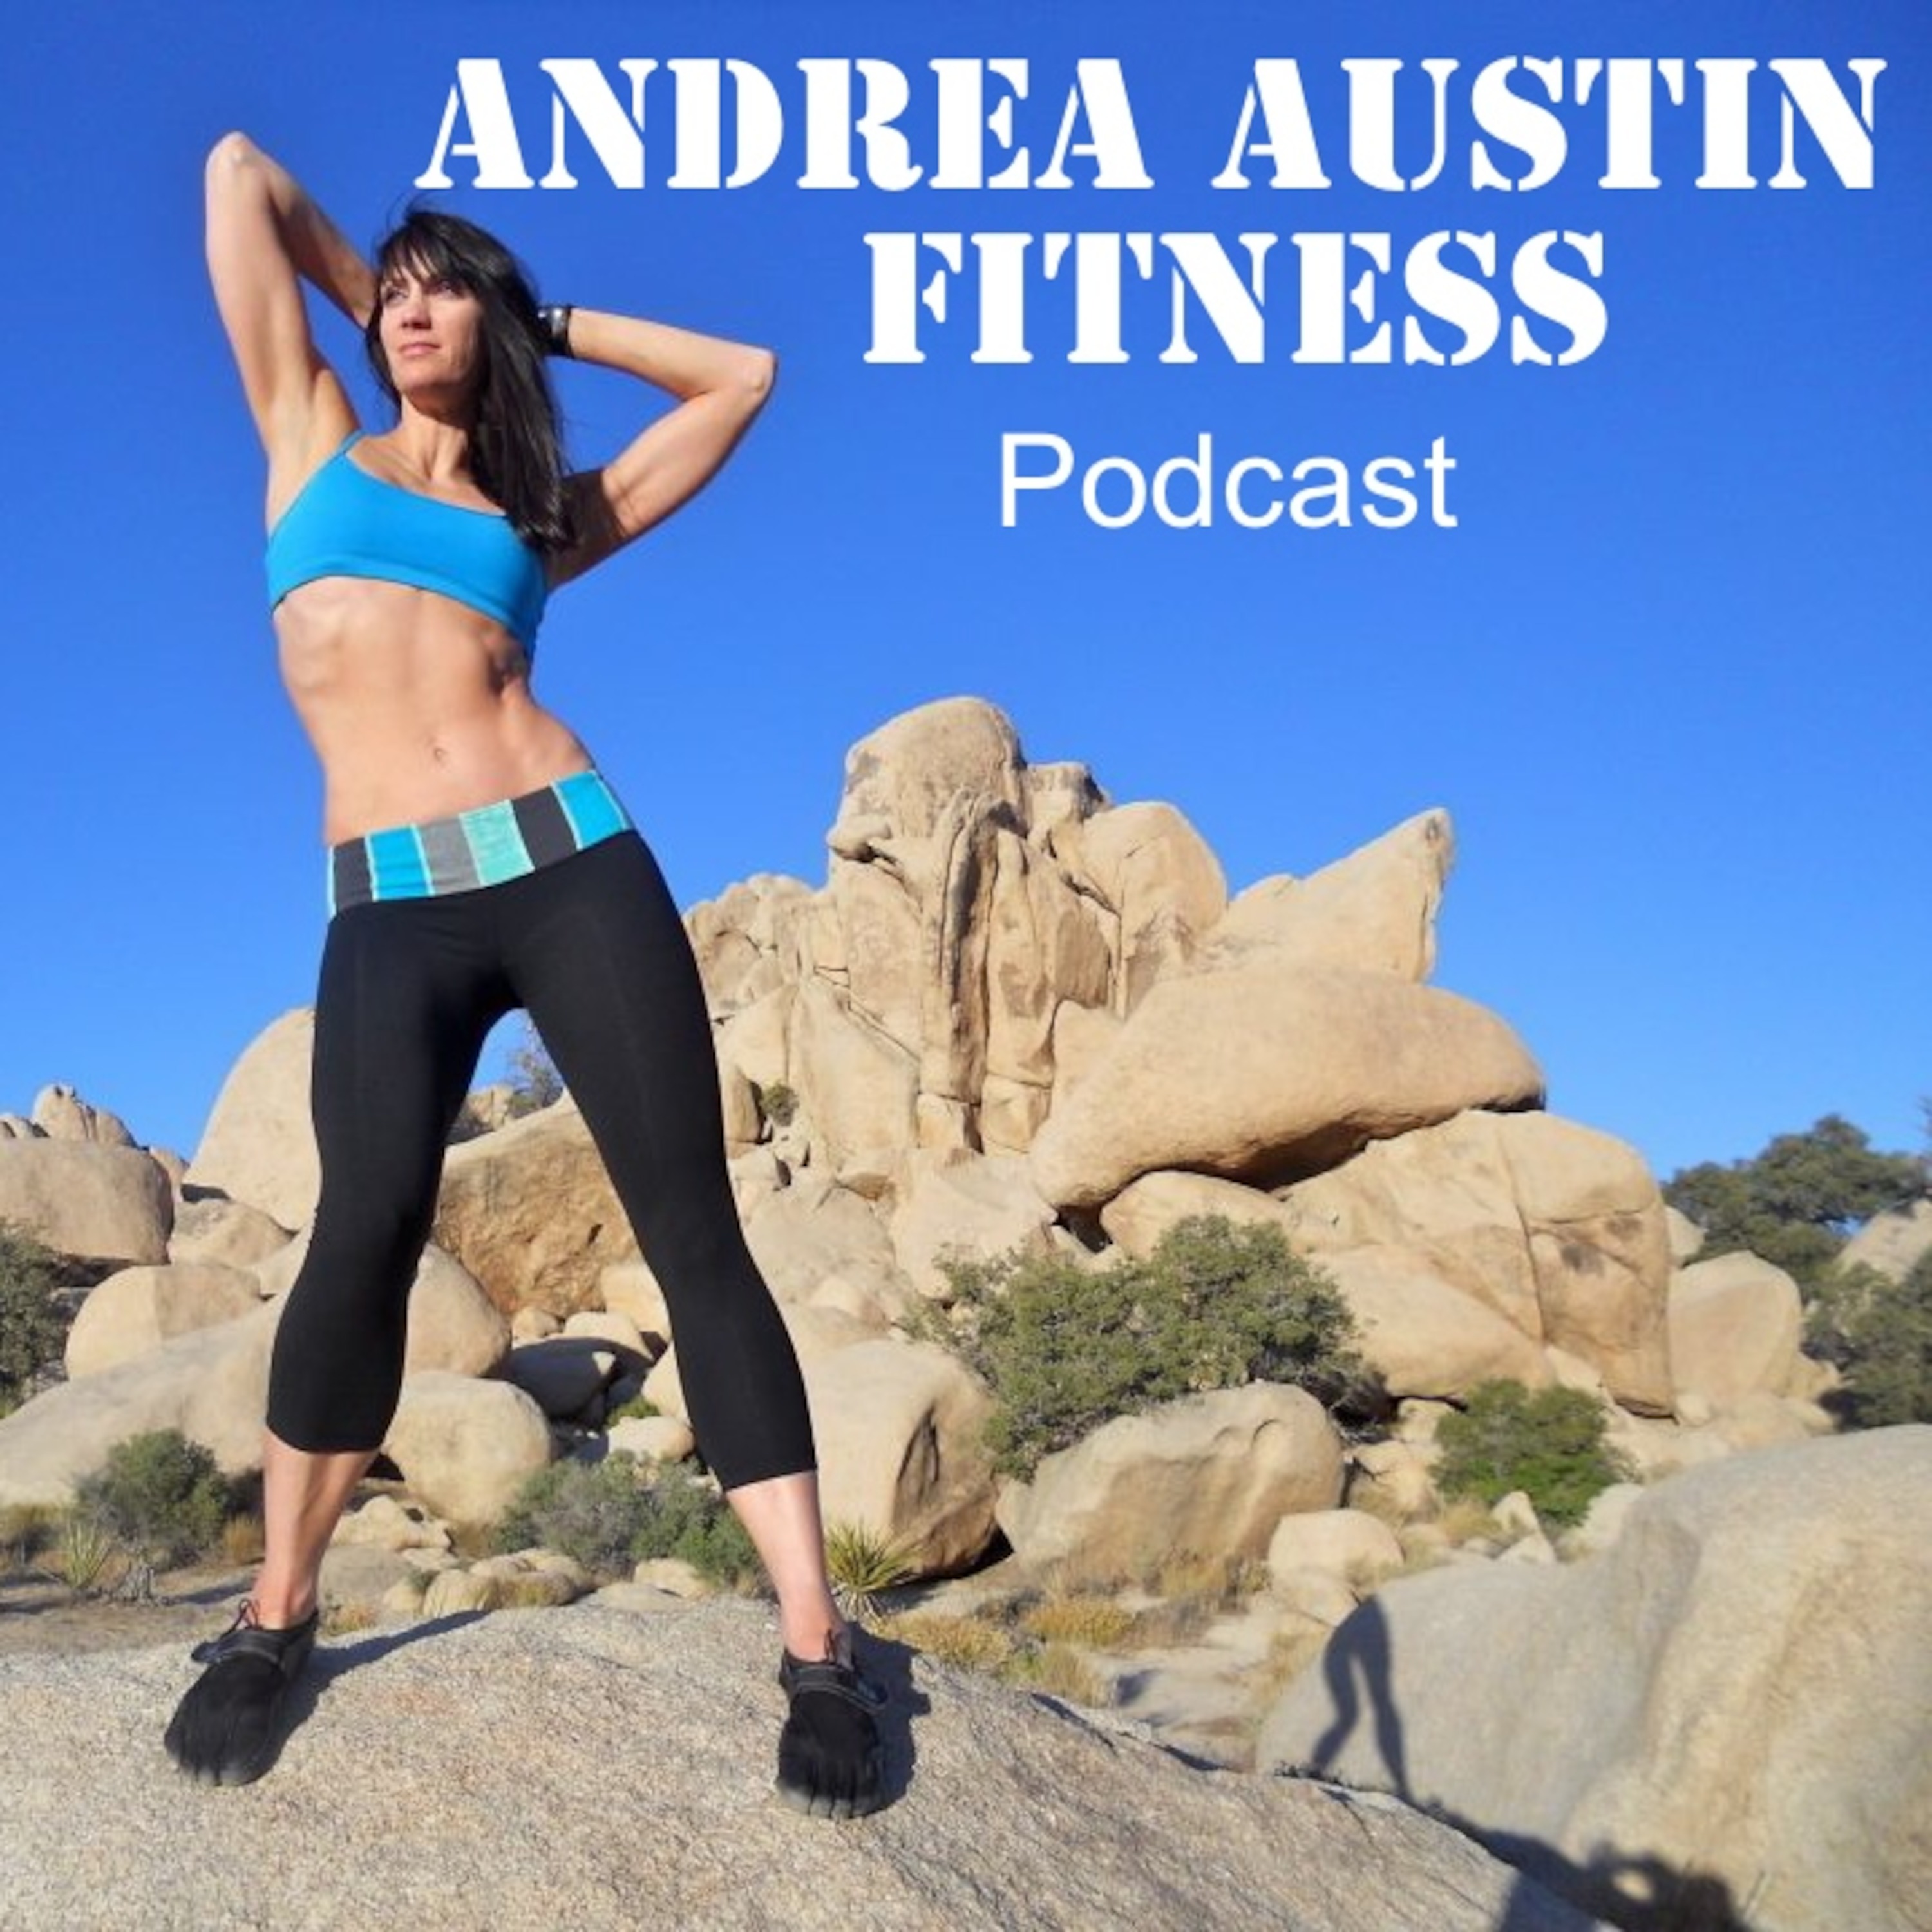 Andrea Austin Fitness